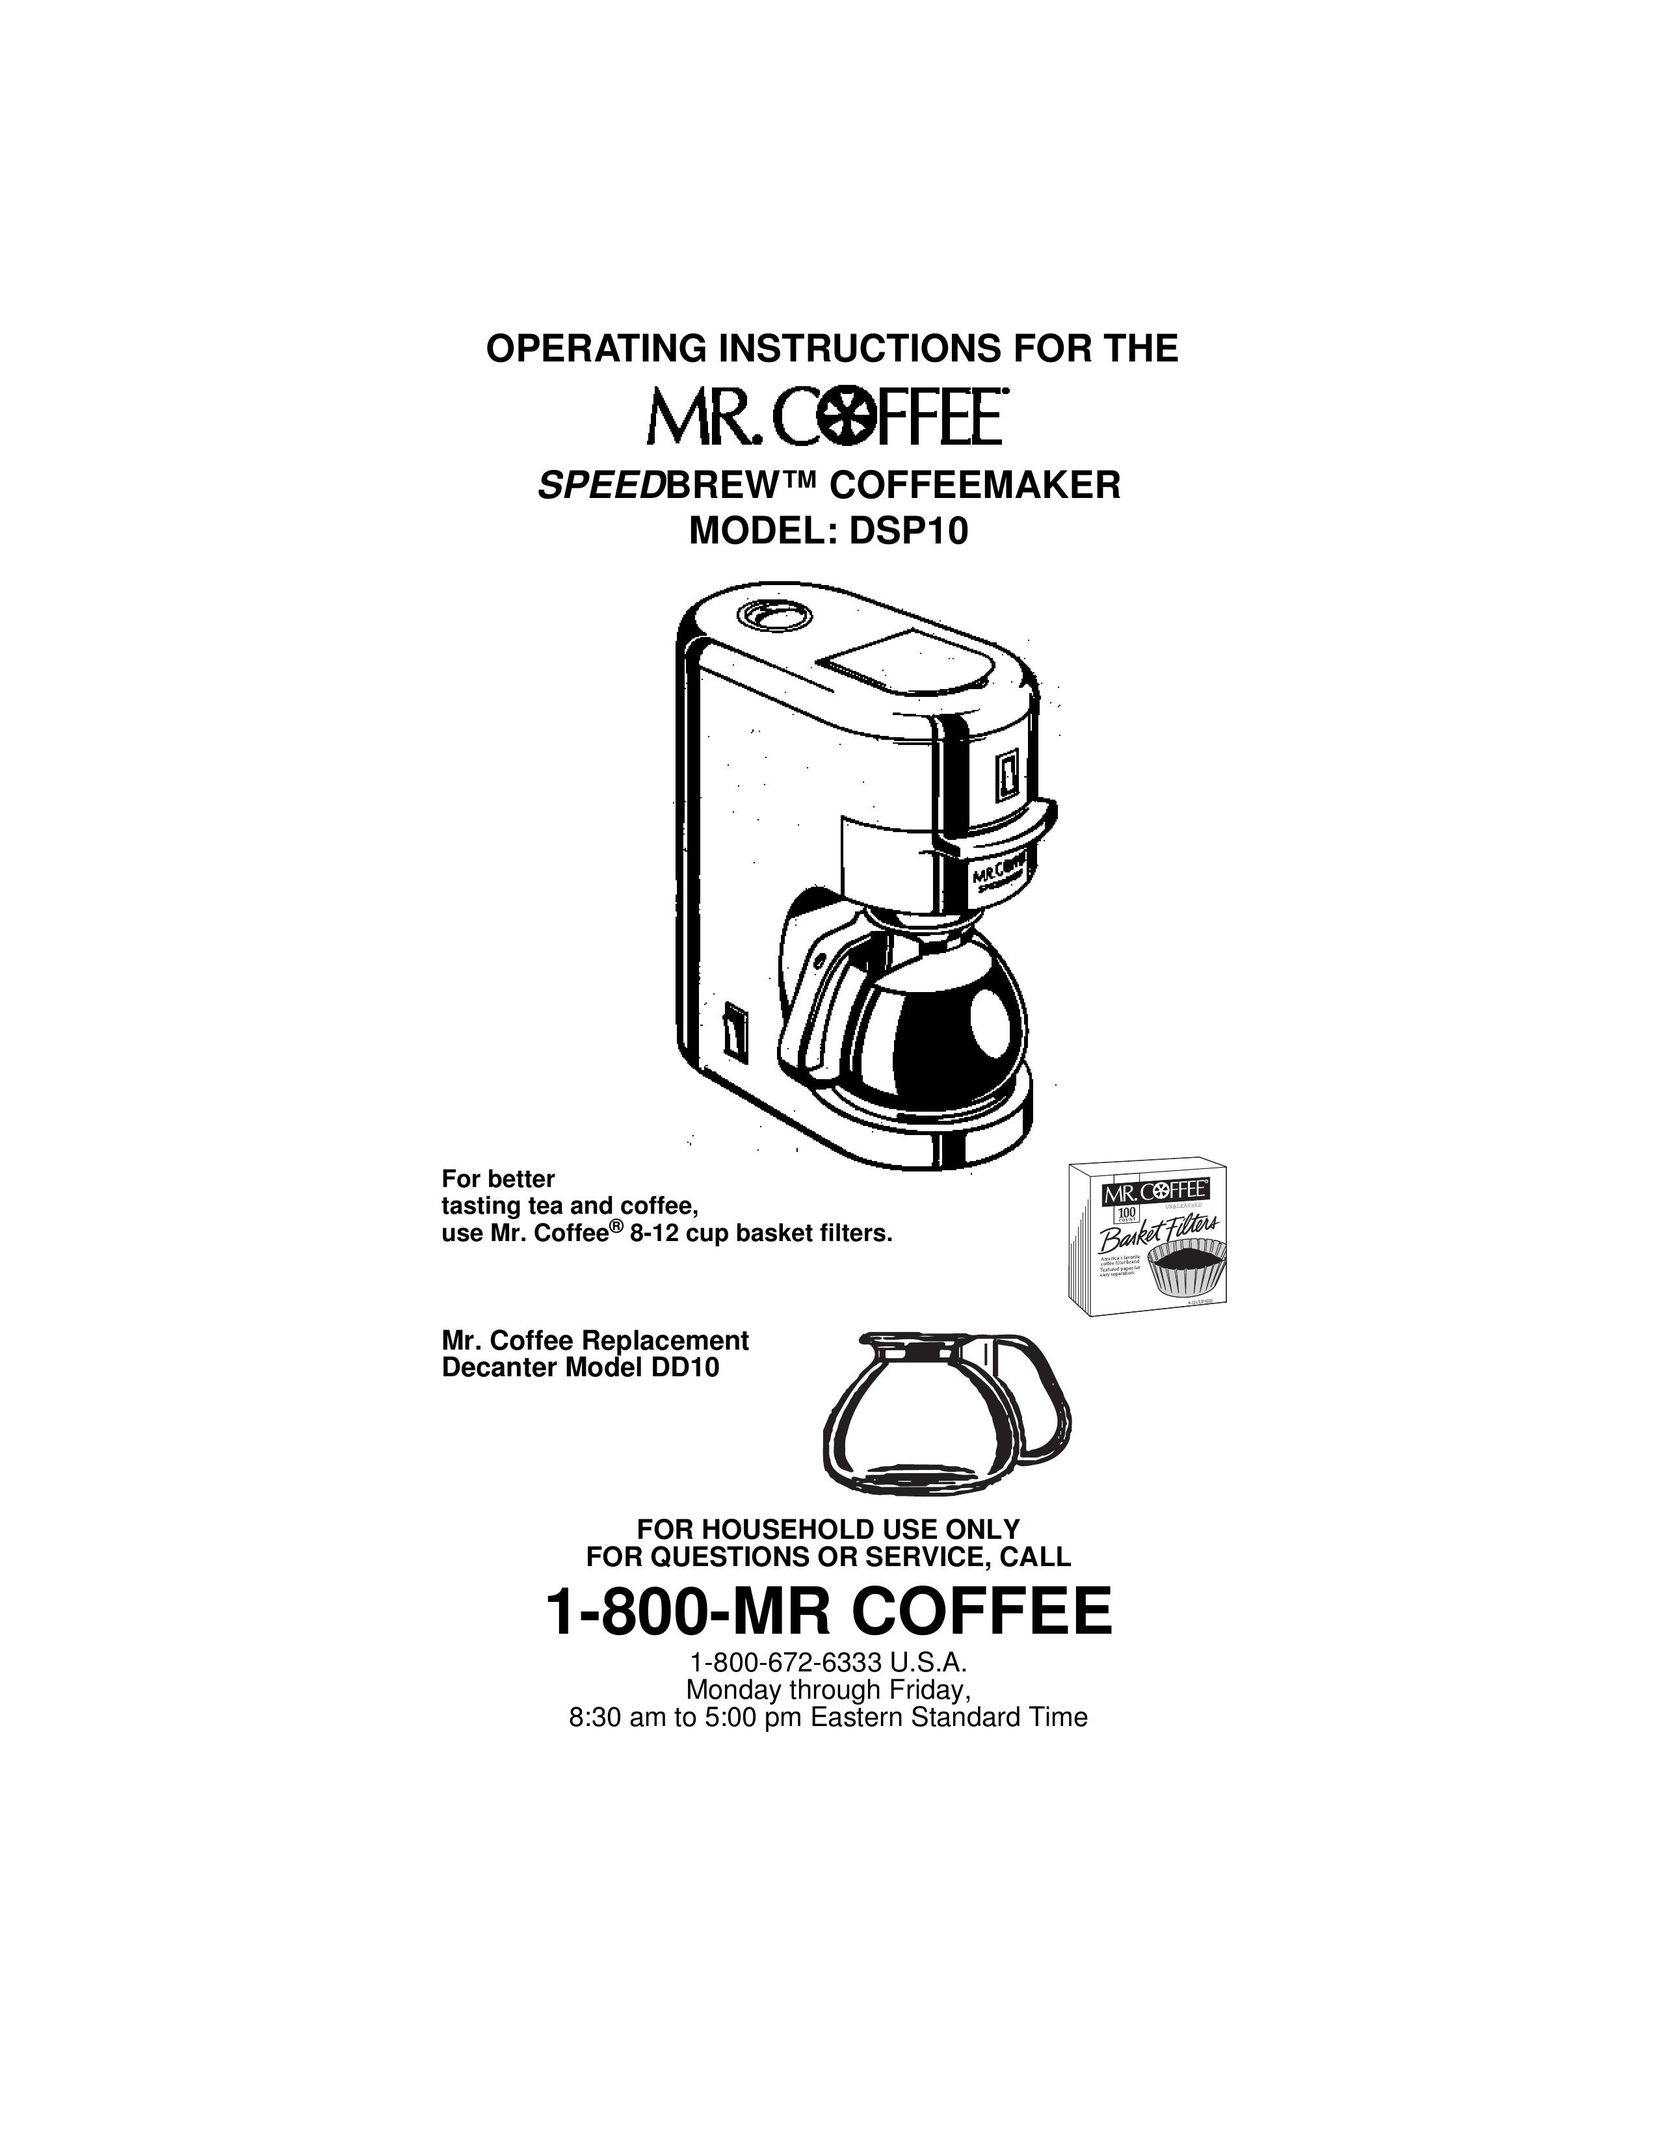 Mr. Coffee DSP10 Coffeemaker User Manual